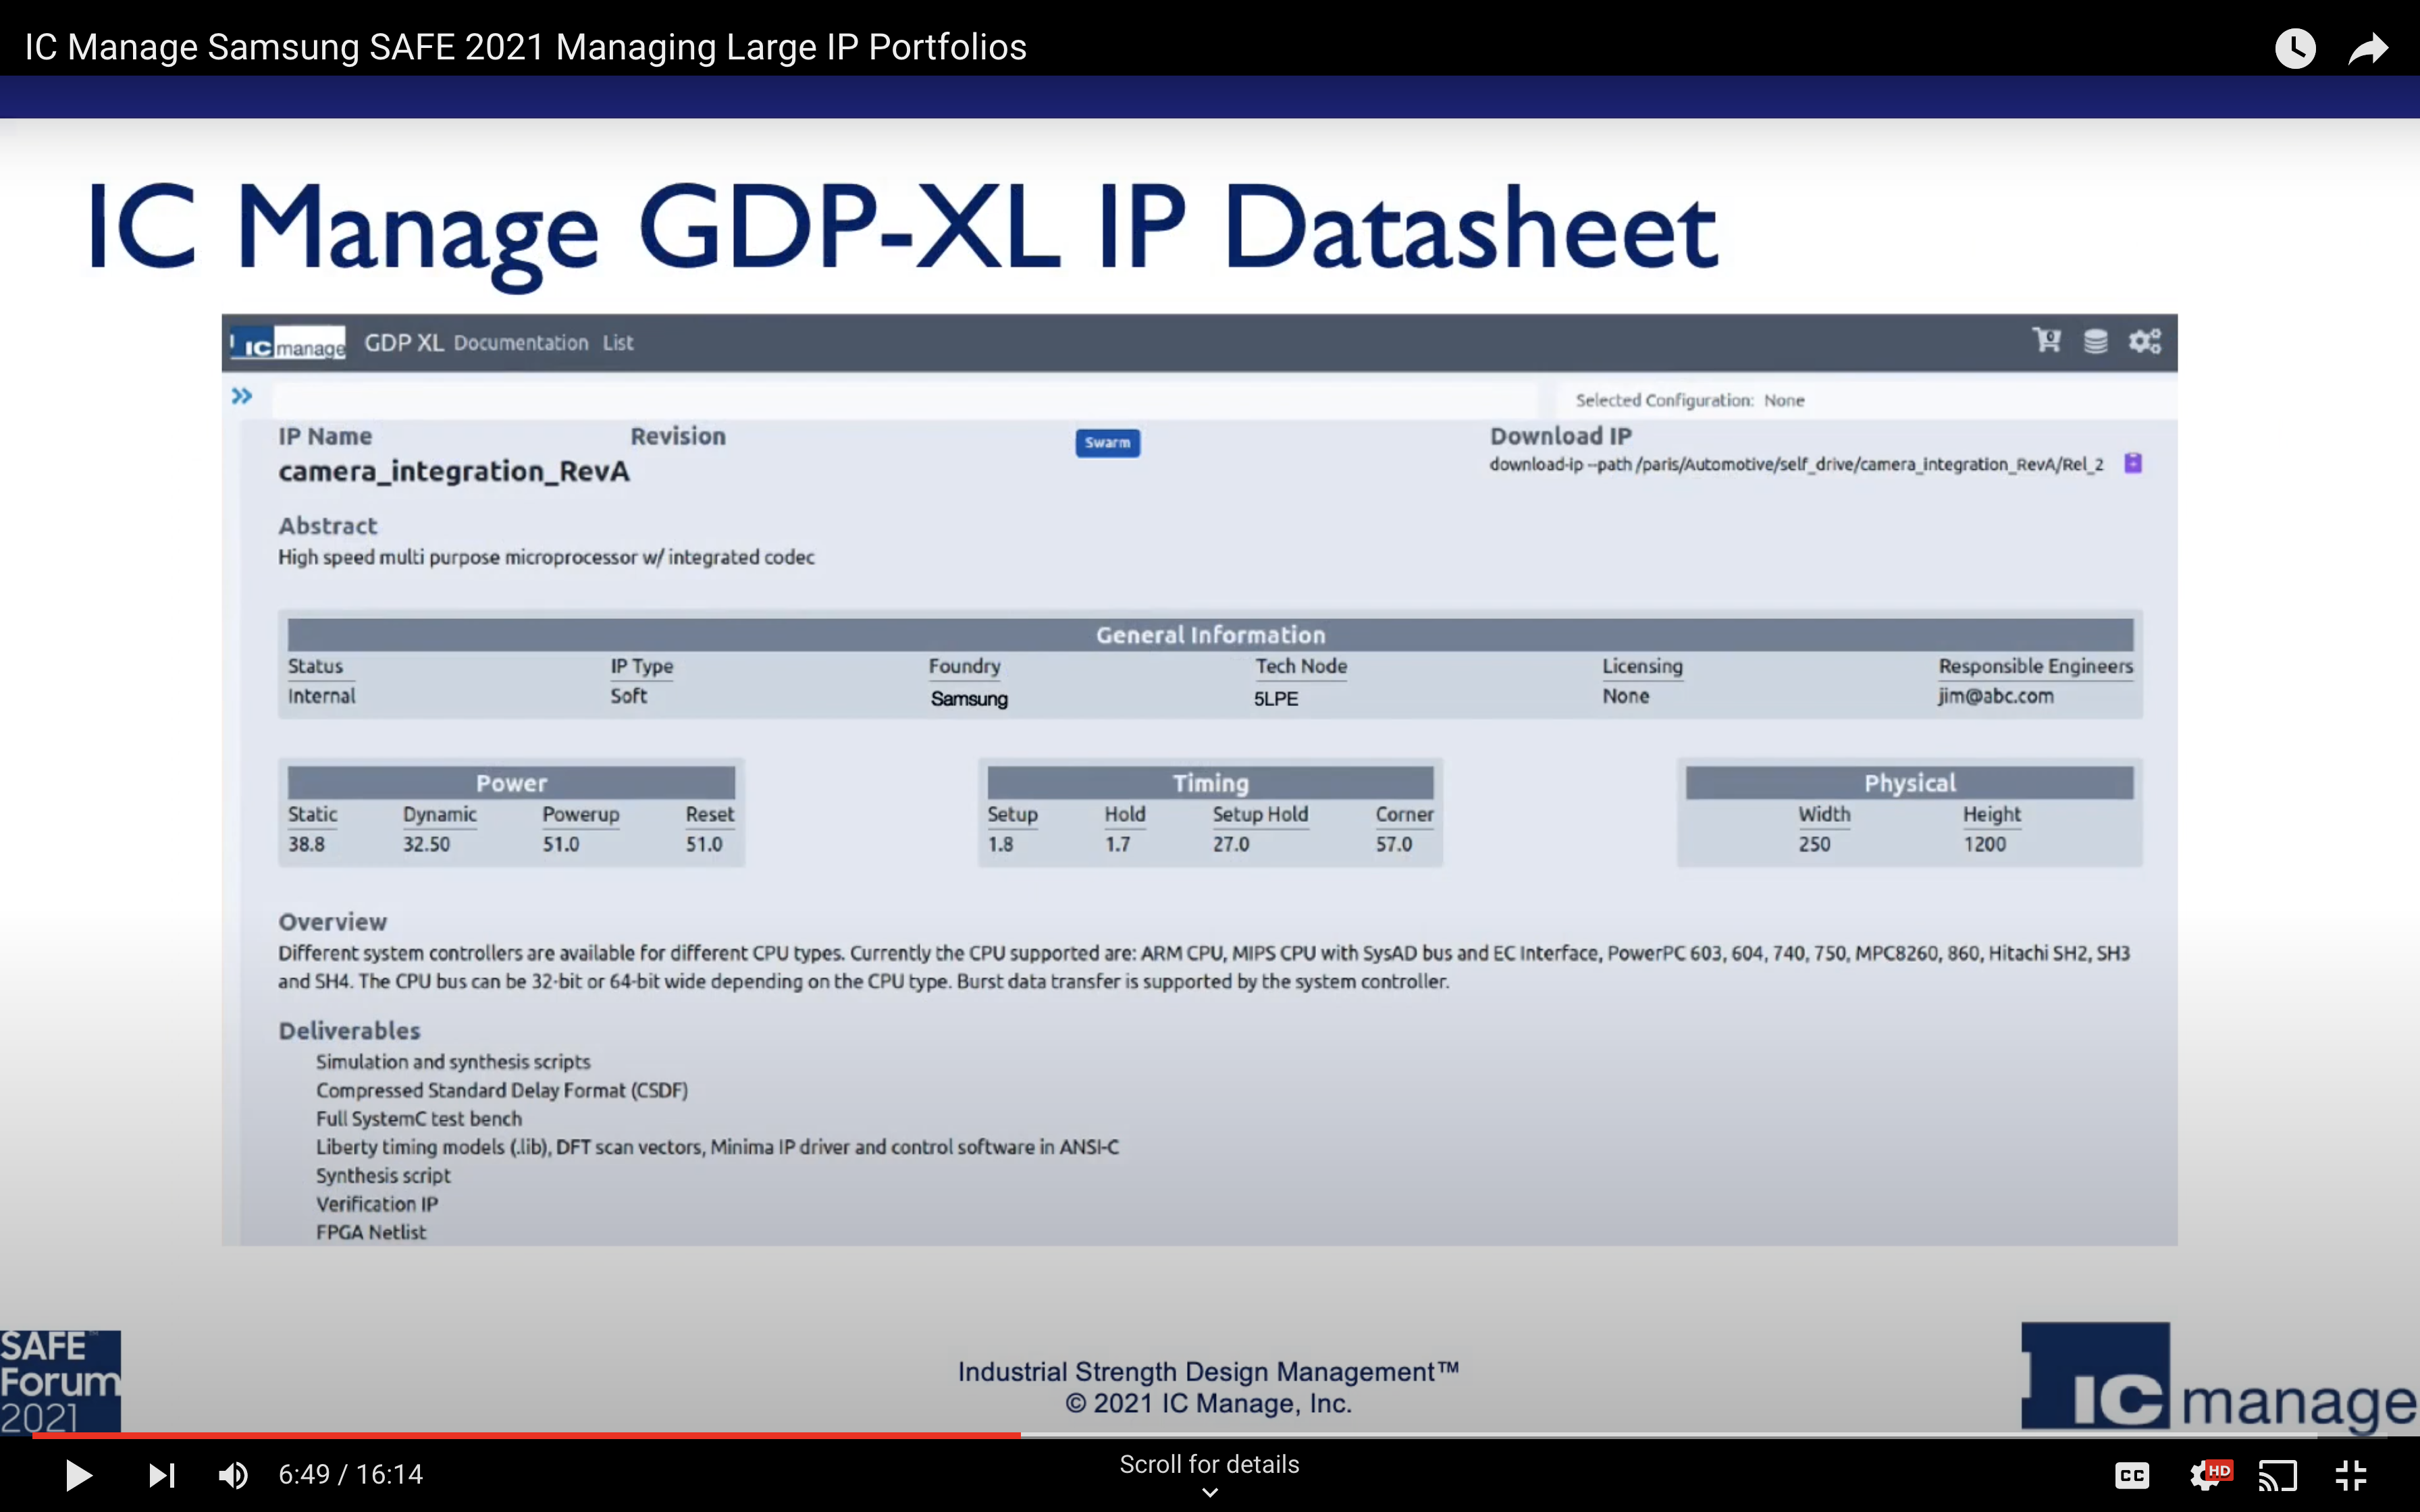 8 GDP XL IP Datasheet